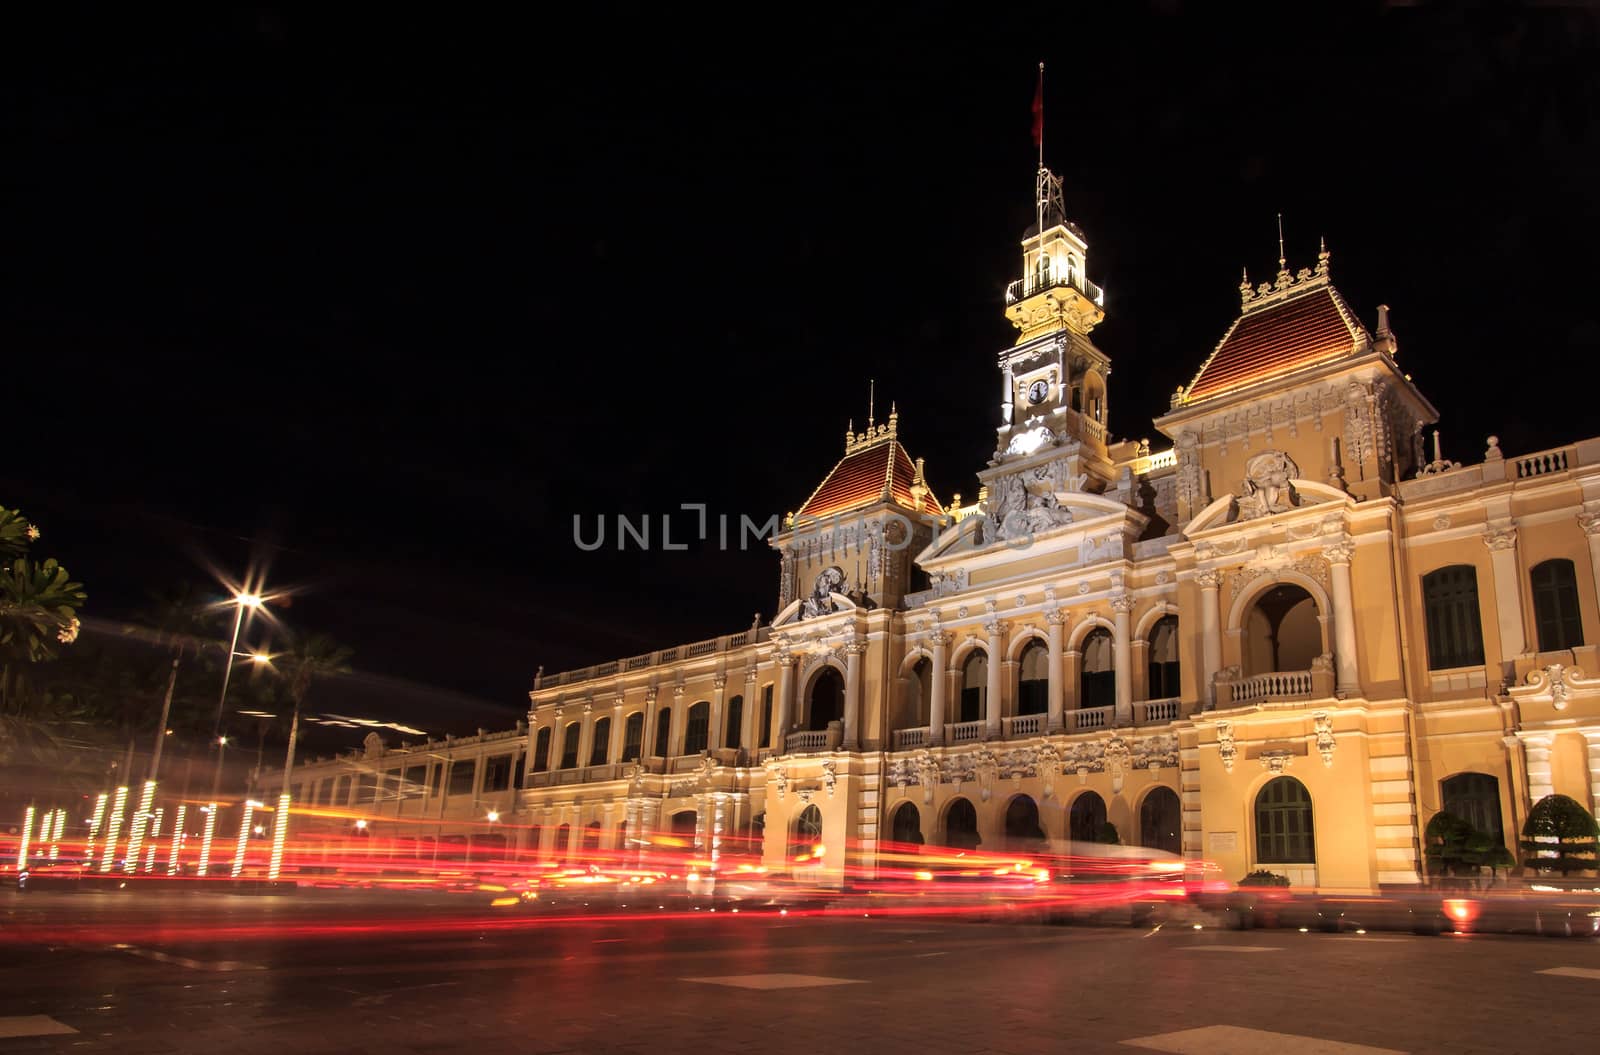 Night View of City Hall, Saigon, Ho Chi Minh City, Vietnam